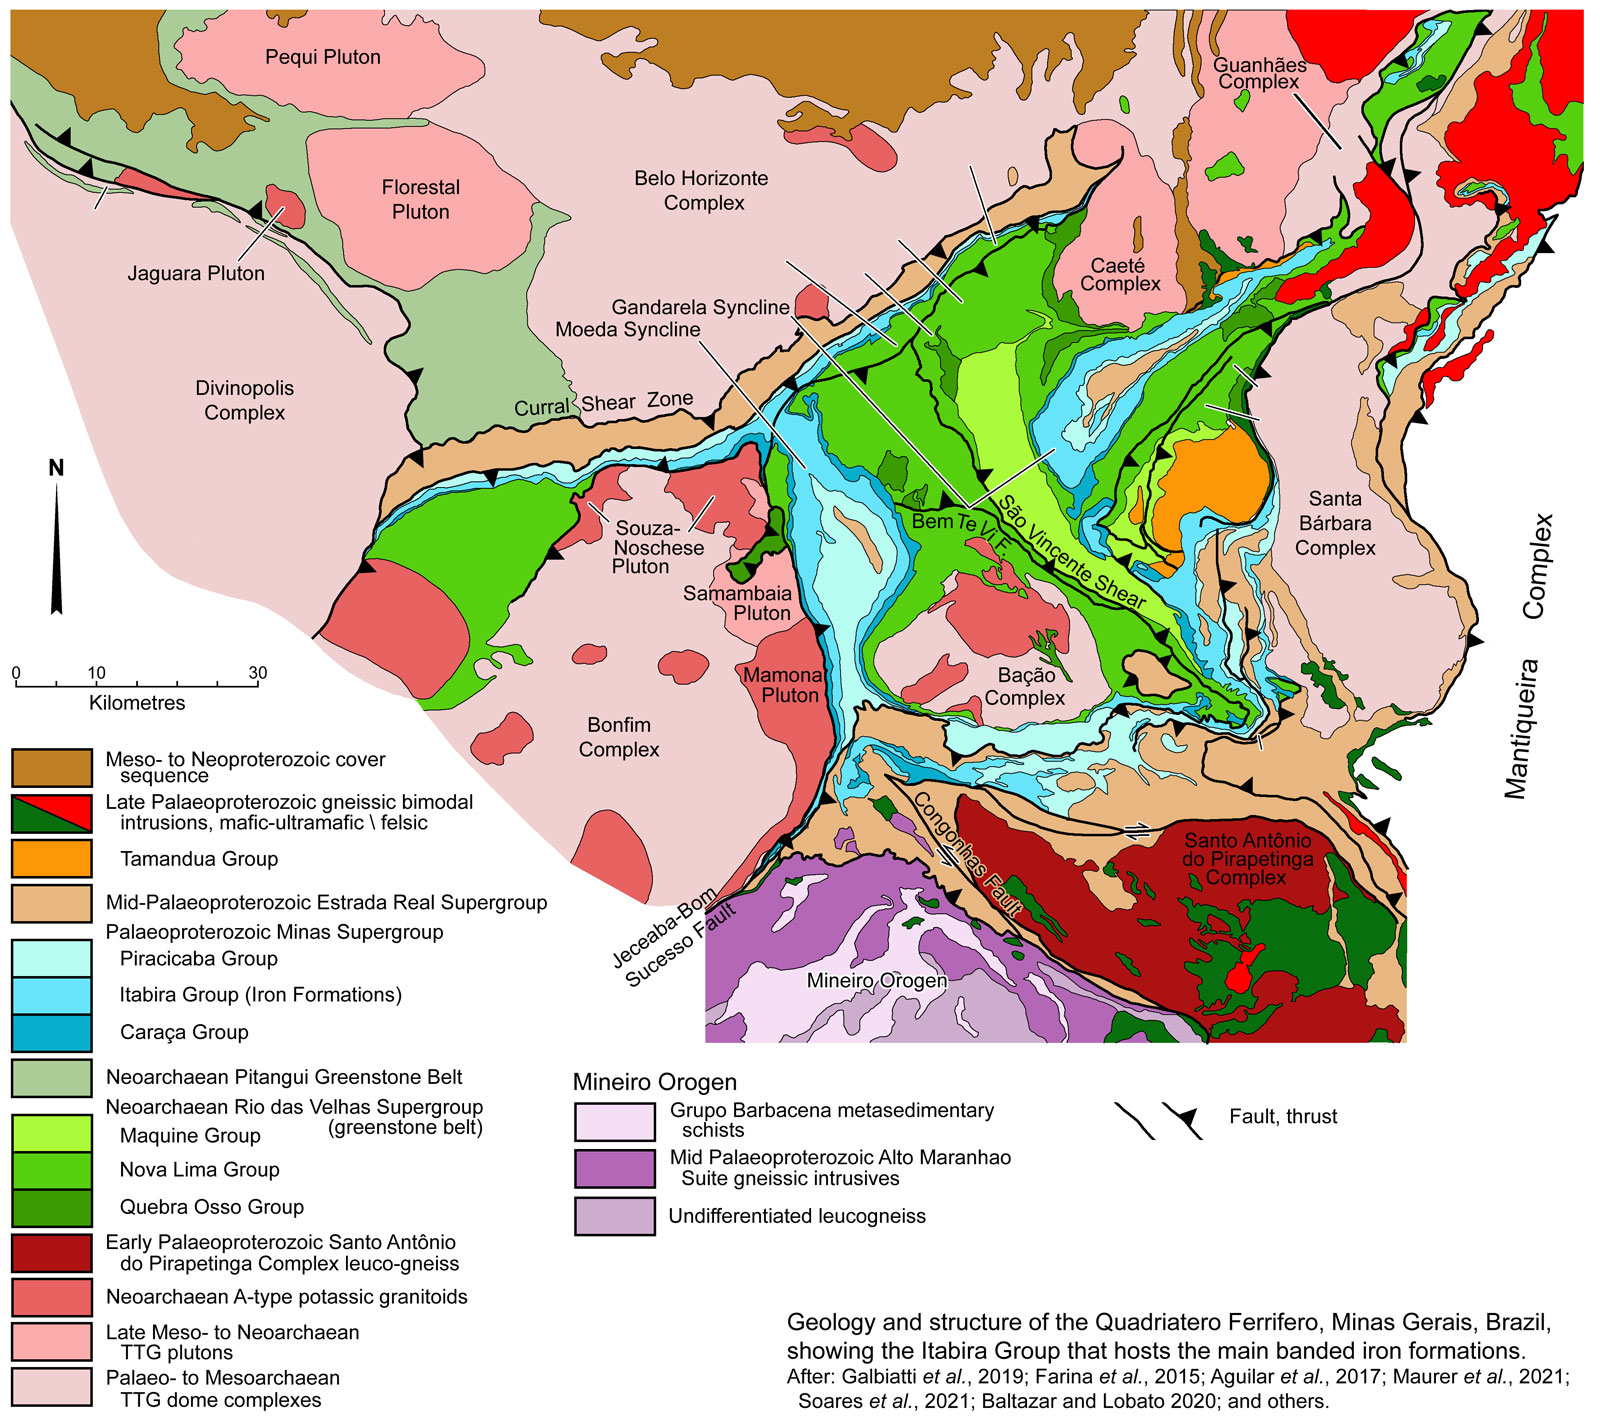 Geologyl of the Quadrilatero Ferrifero